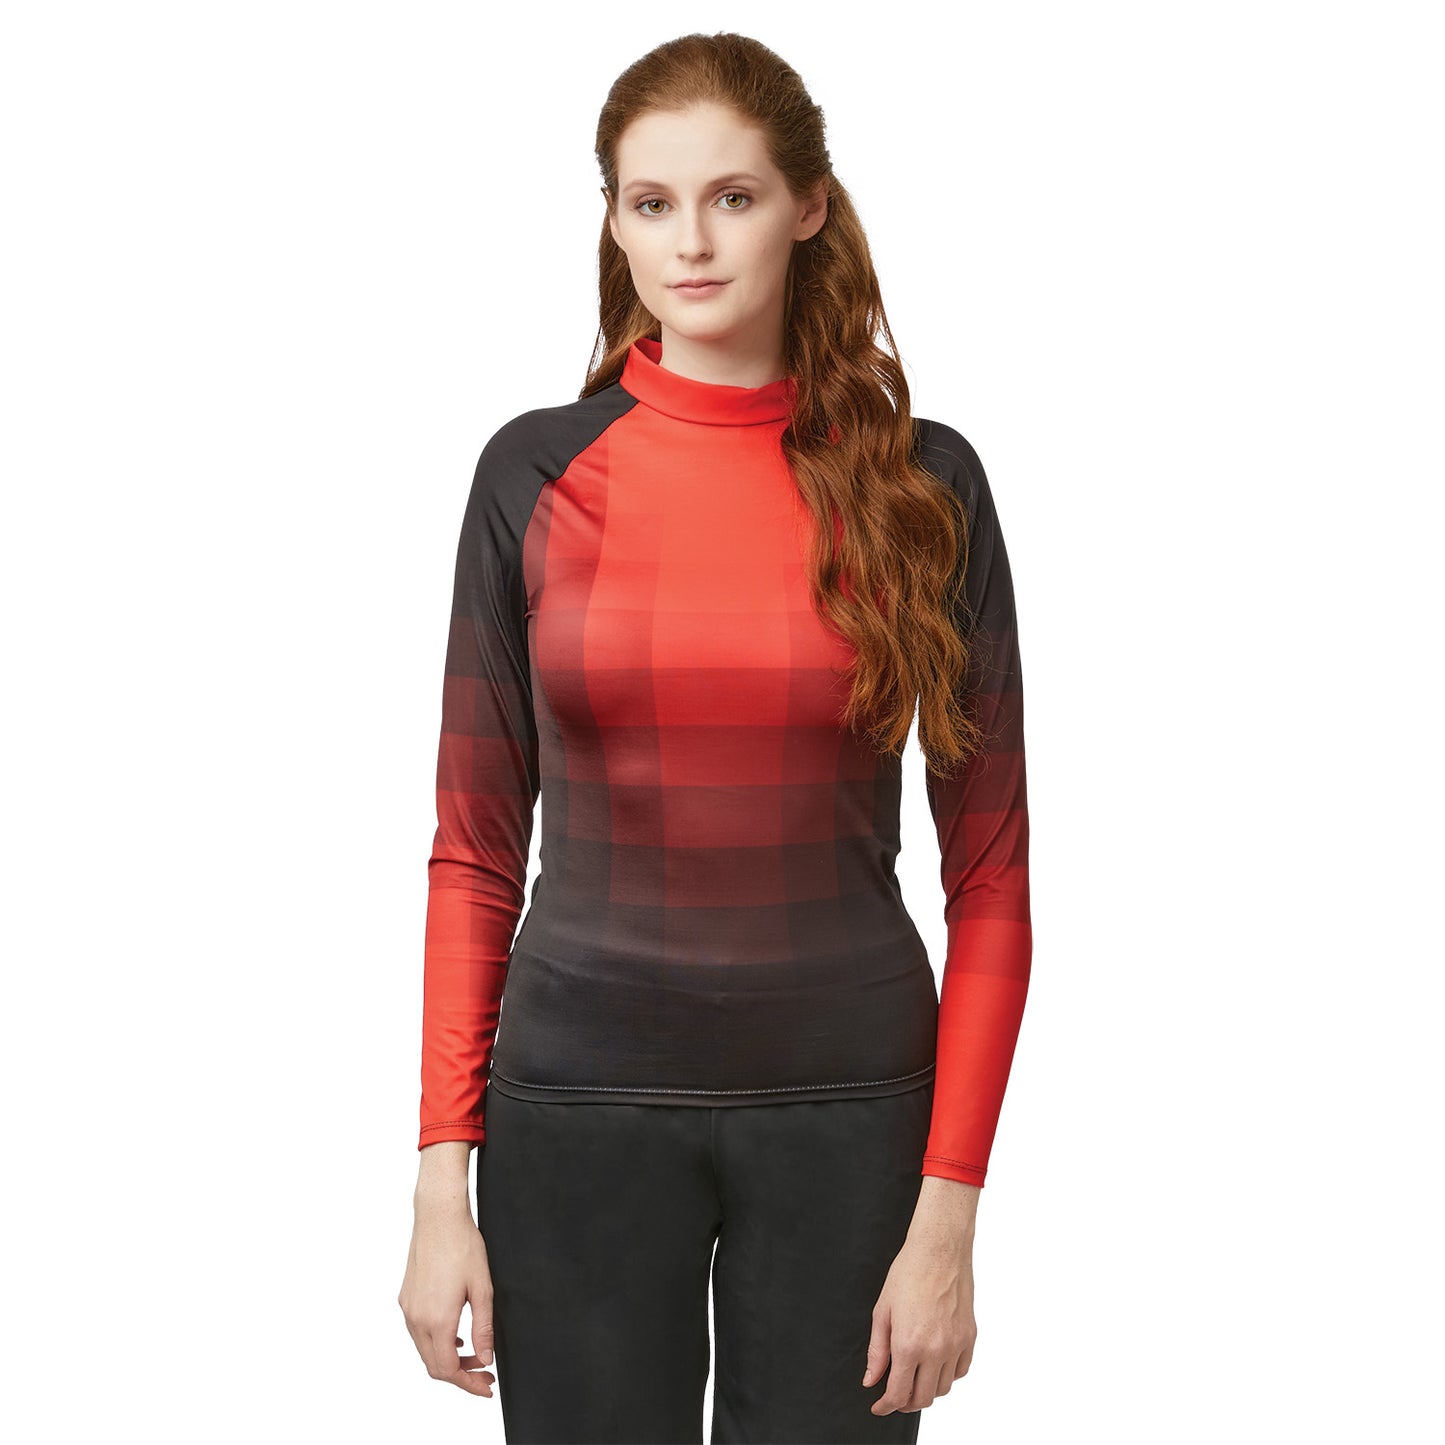 Vivace Digital Shirt - Compression Fit with mock neck, raglan long sleeves